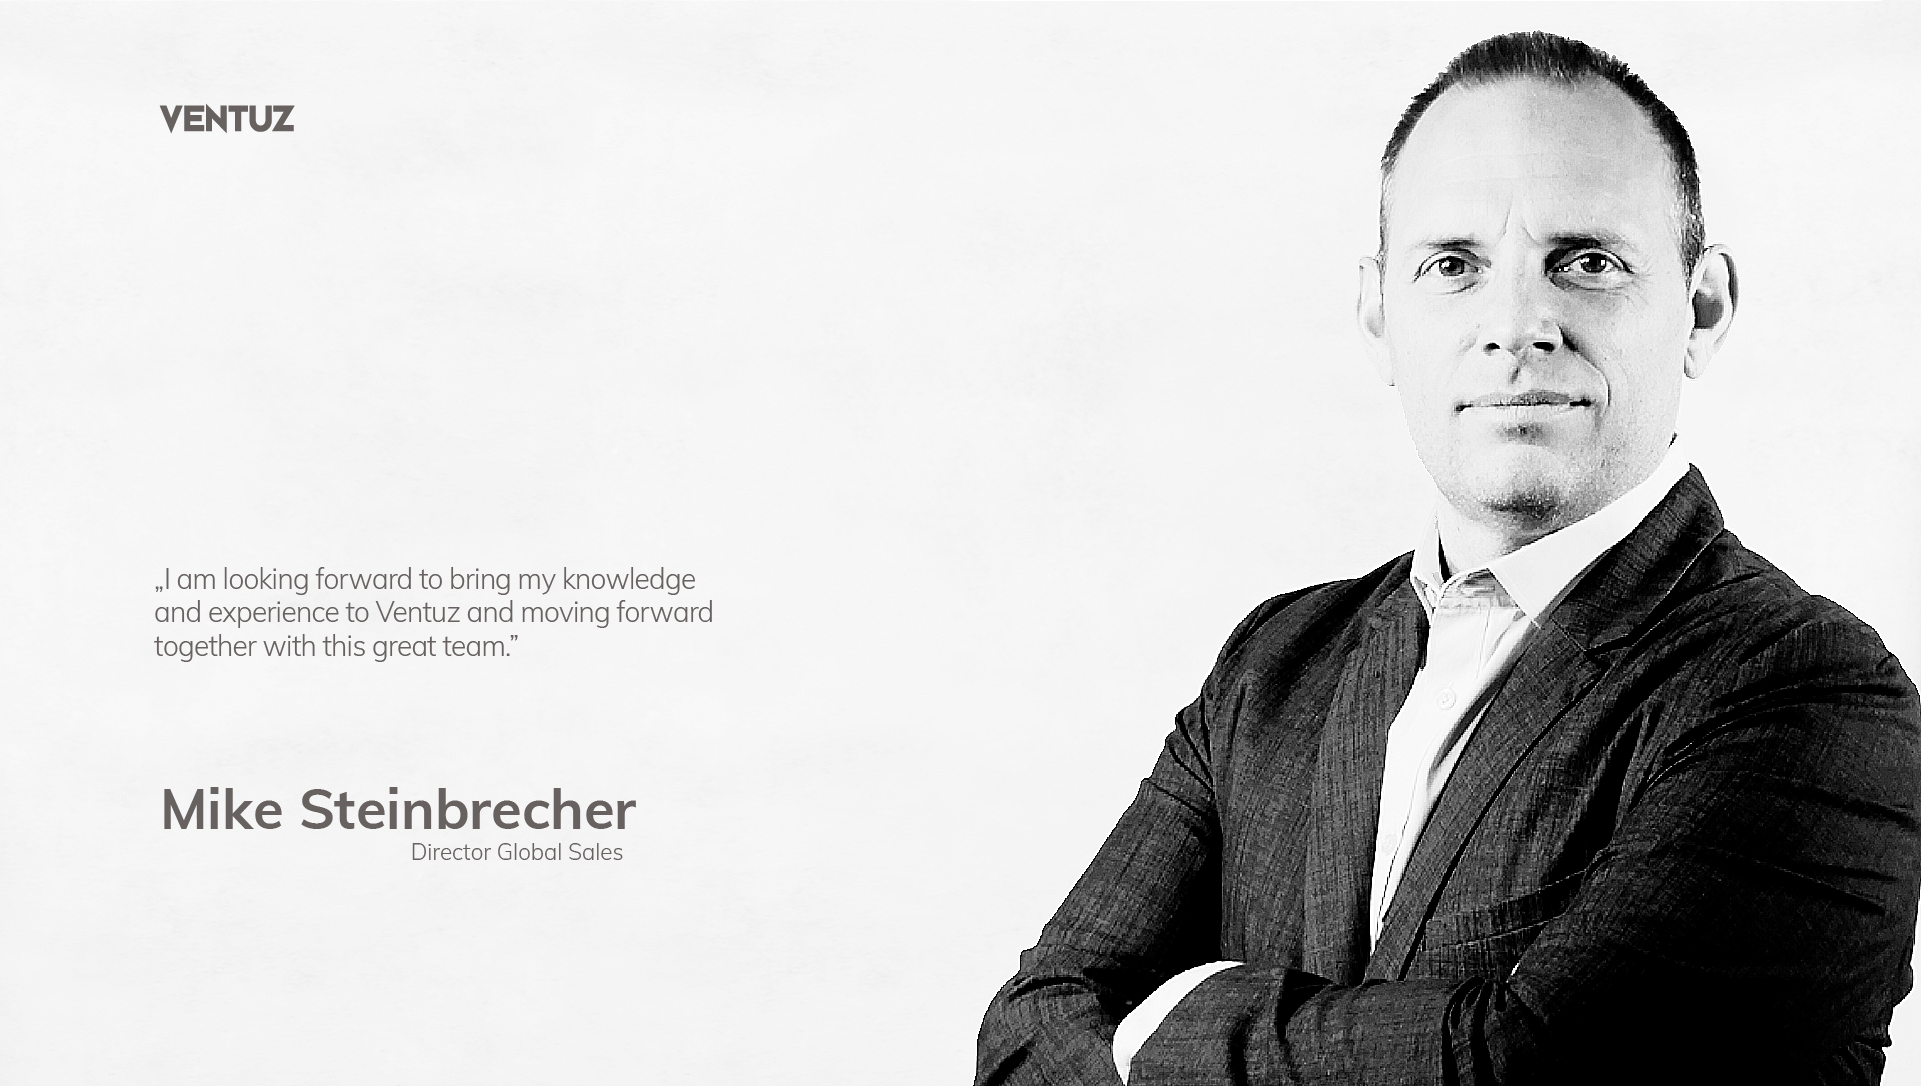 Mike Steinbbrecher - Director Global Sales